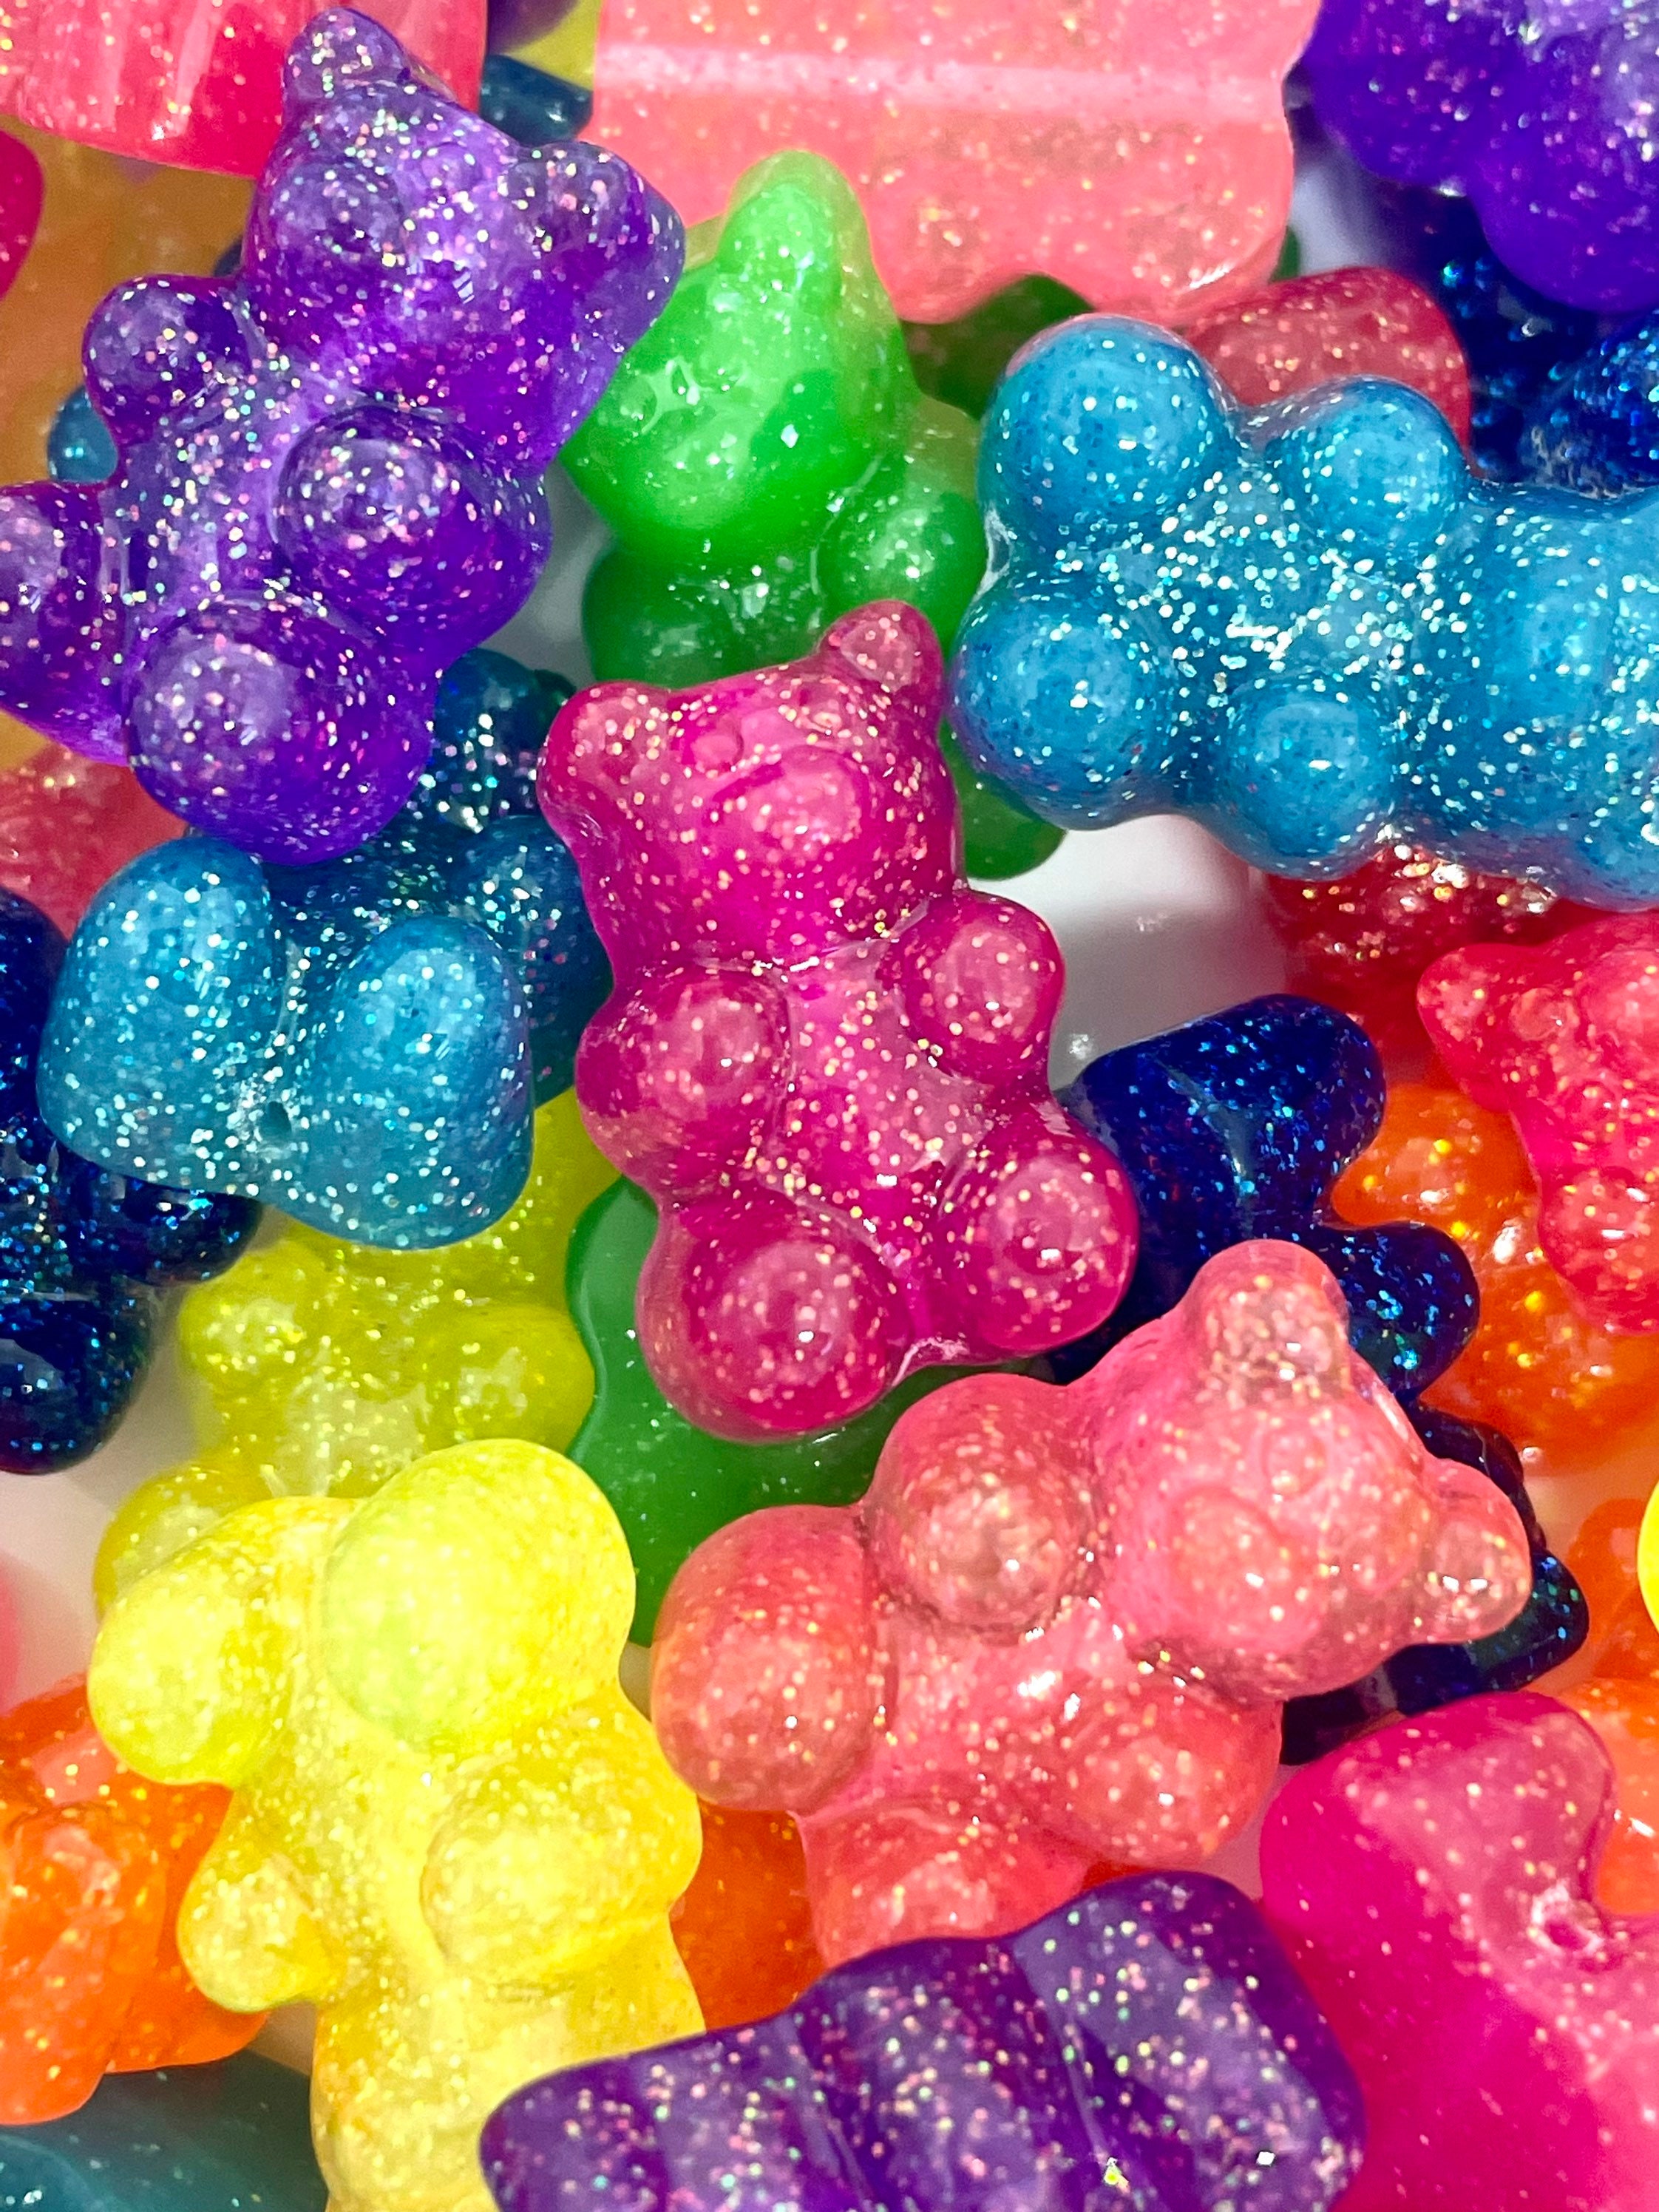  CCOZN 32 Pieces Resin Gummy Bear Pendant, 16 Colors